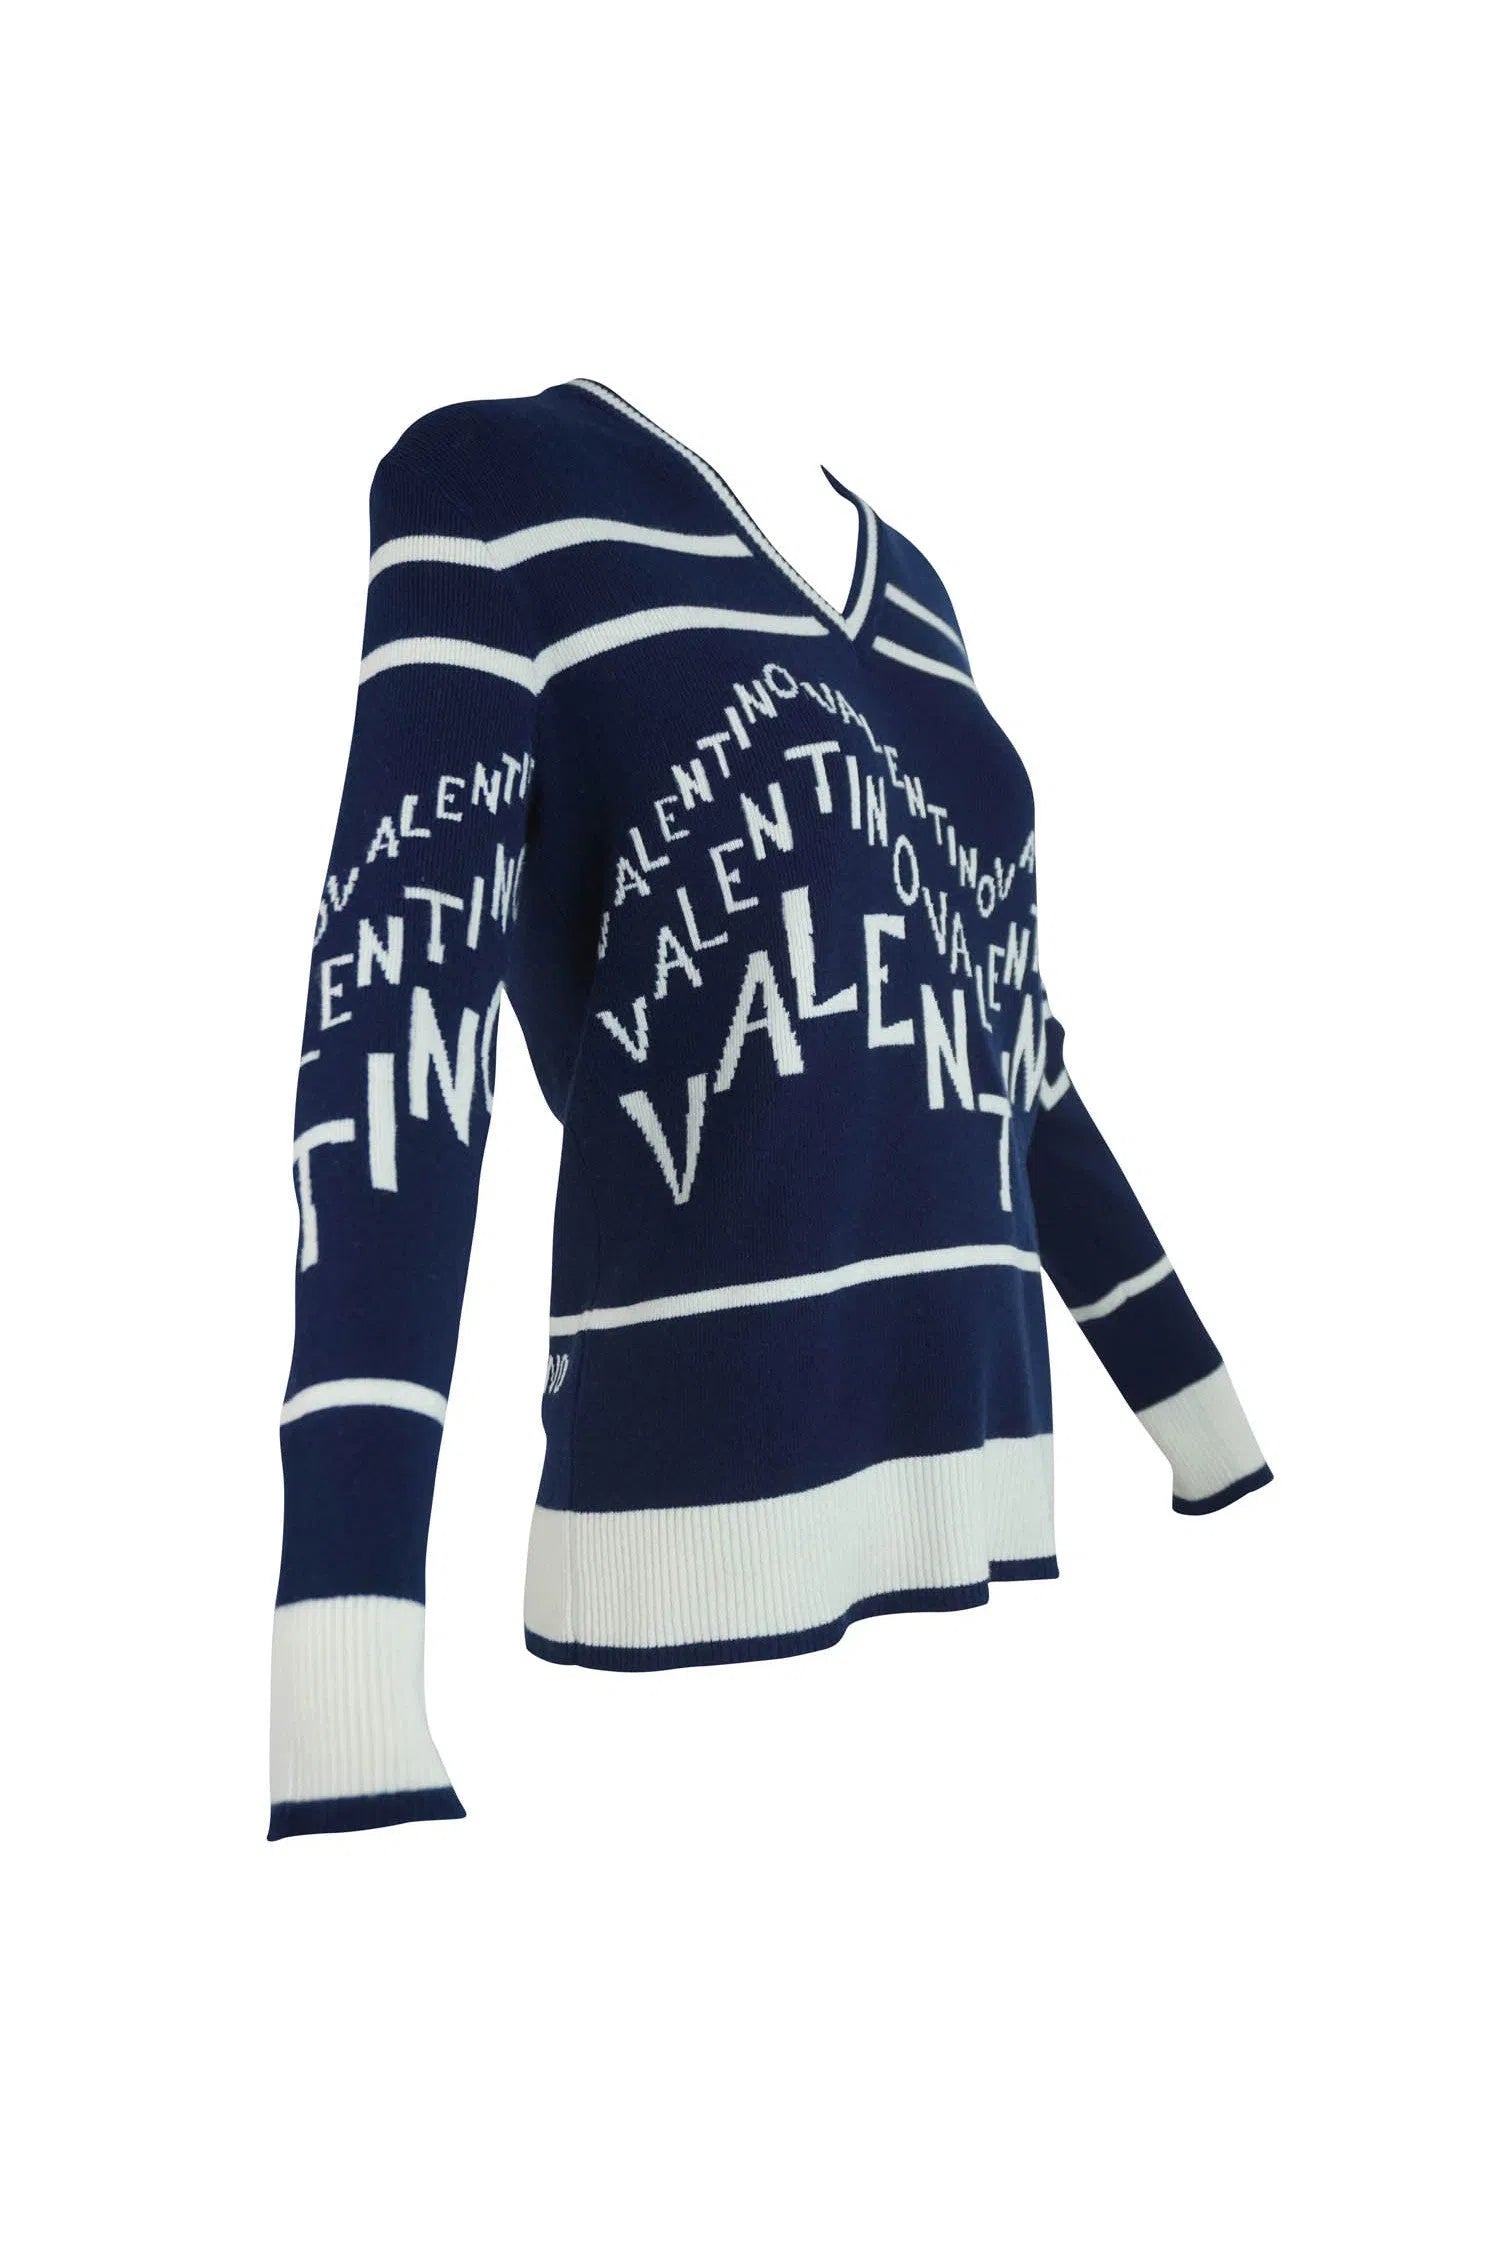 Valentino Logo V Neck Sweater 2019 - Foxy Couture Carmel